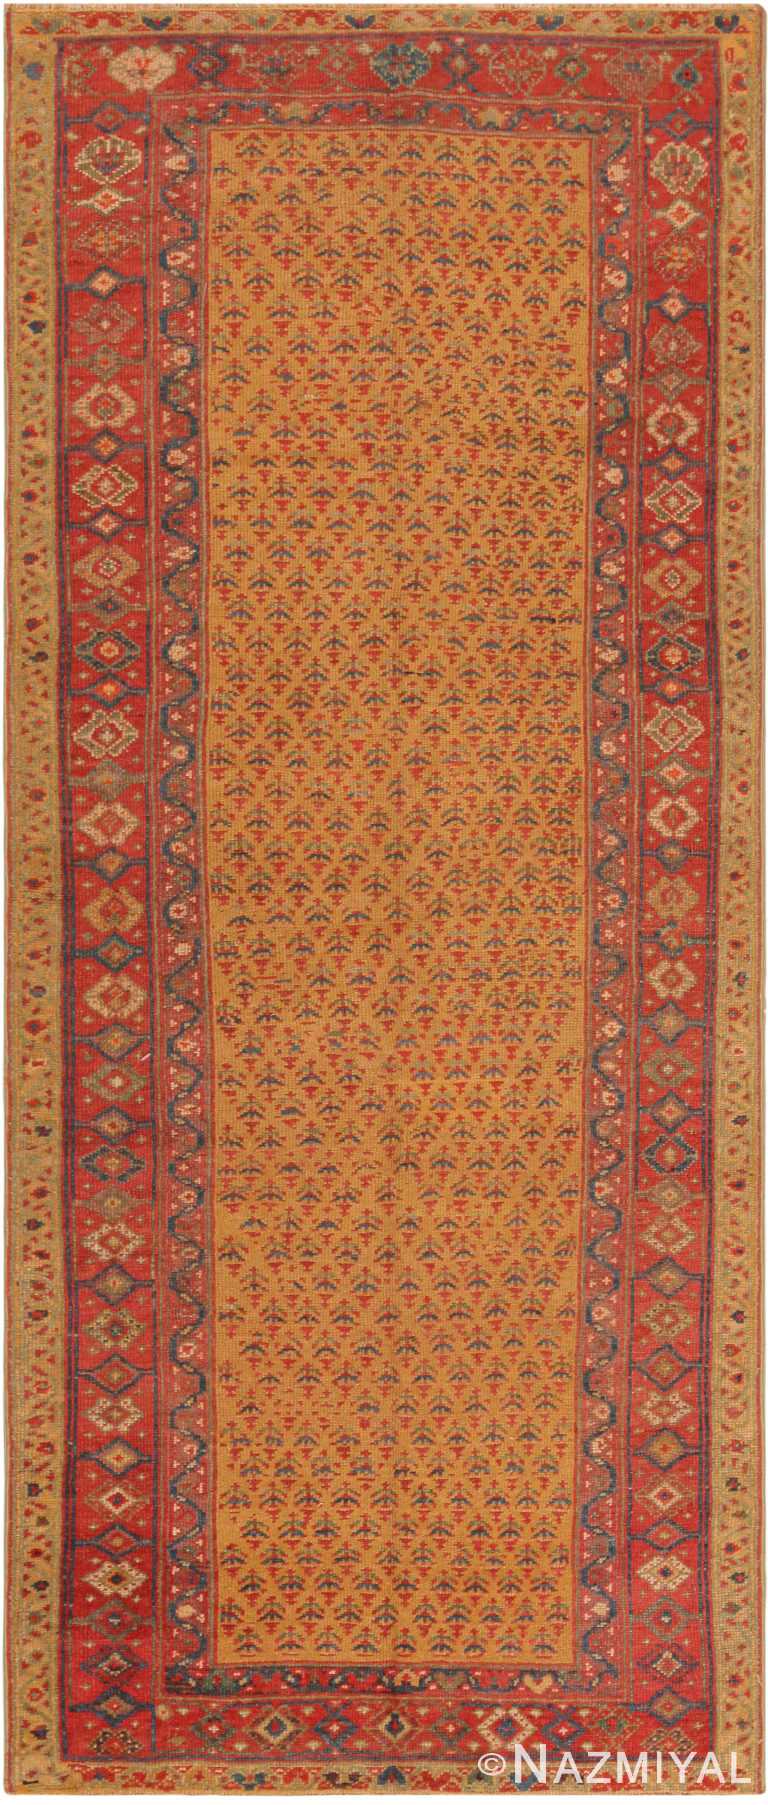 Antique Persian Kurdish Rug 71833 by Nazmiyal Antique Rugs